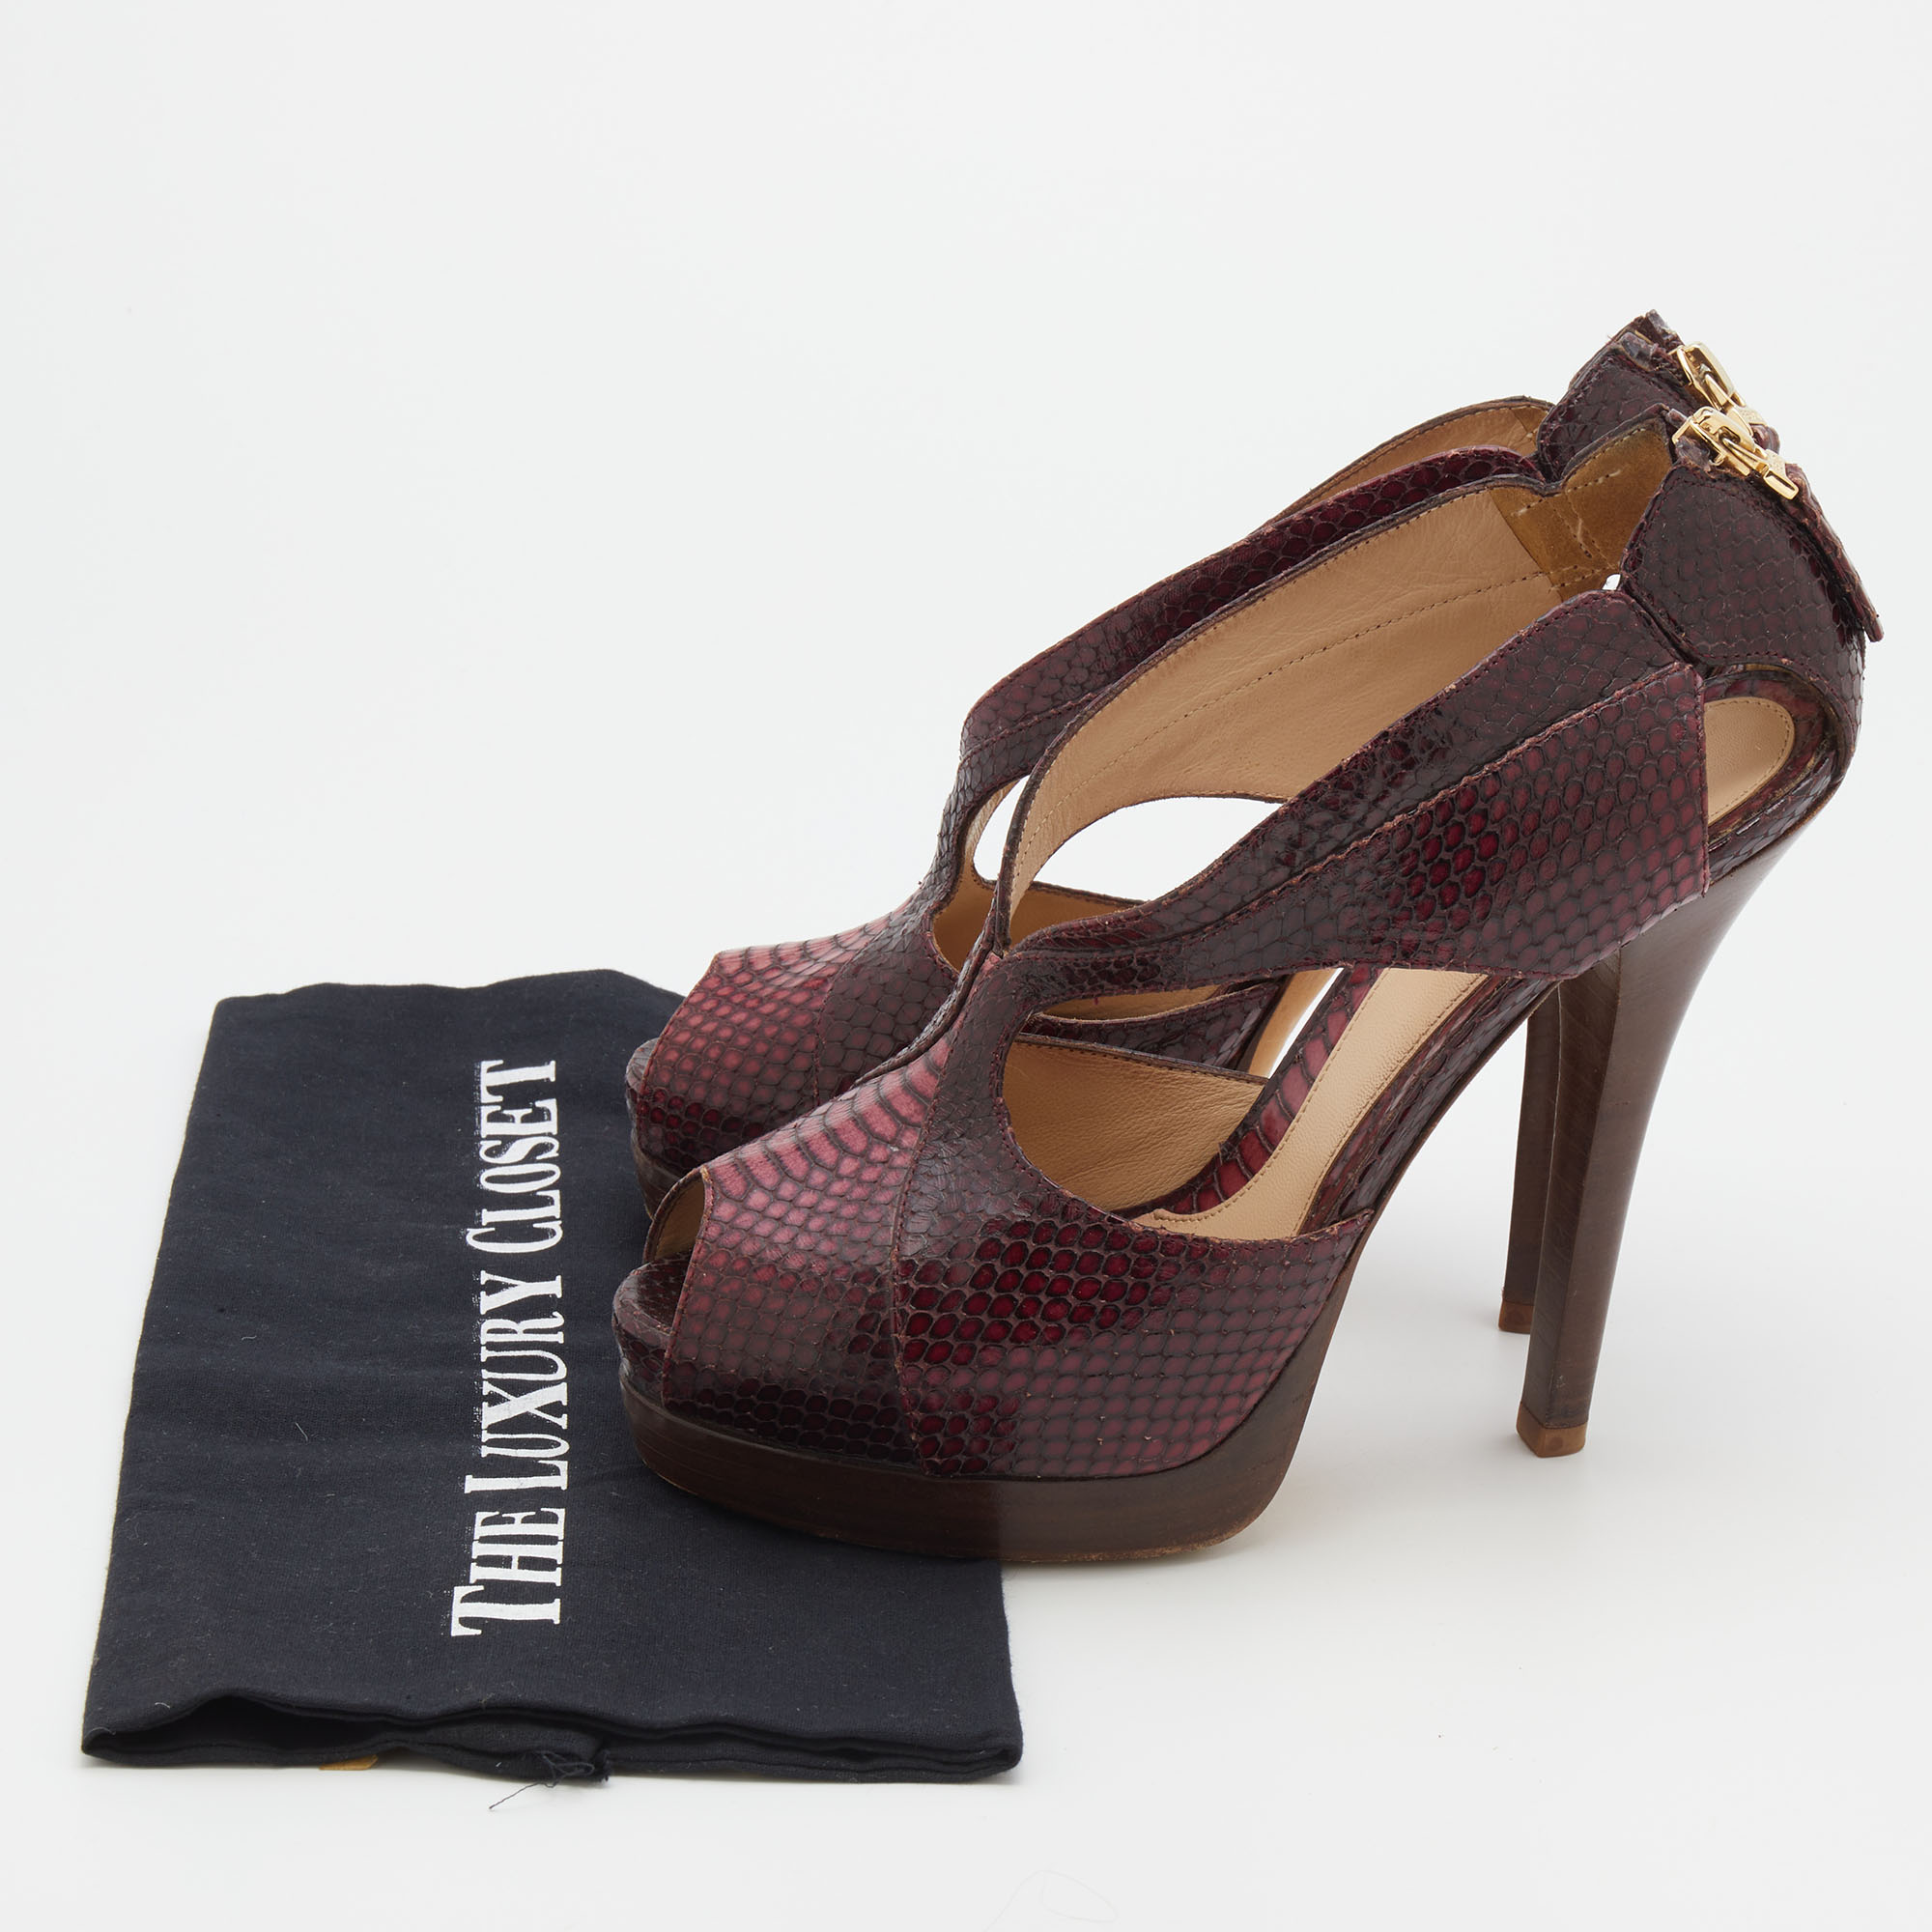 Fendi Burgundy Python Embossed Leather Strappy Peep Toe Platform Sandals Size 40